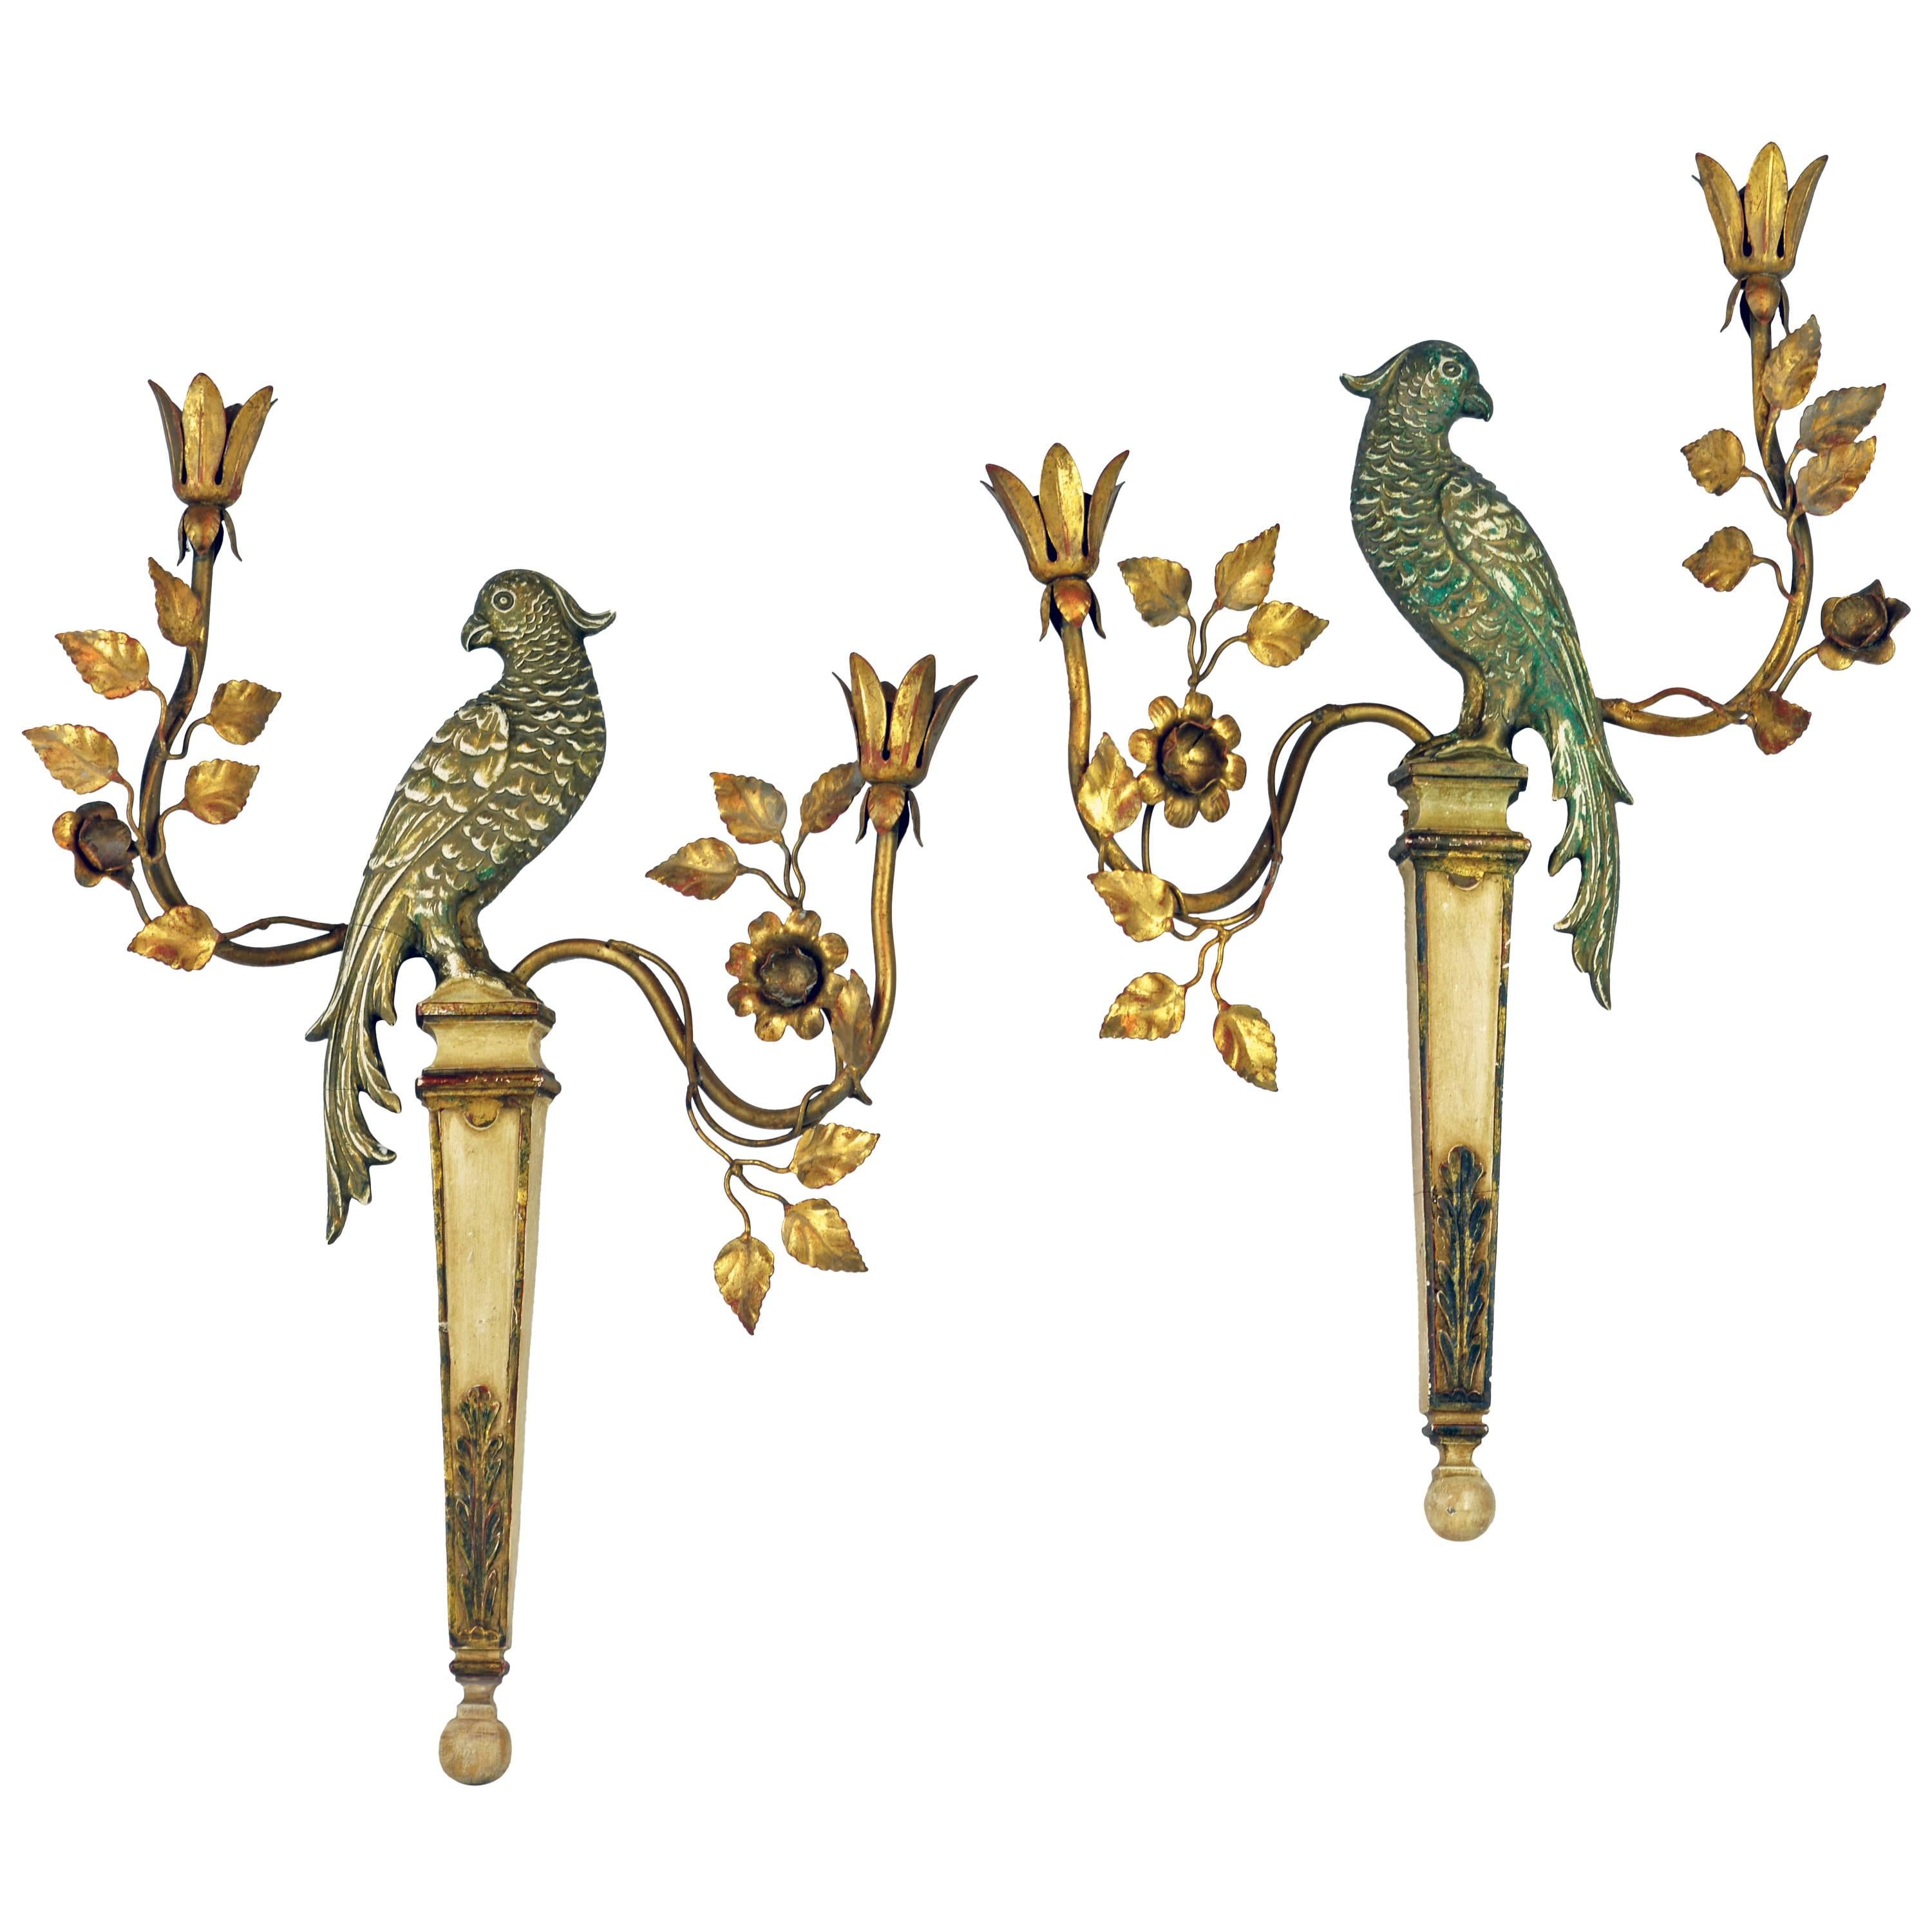 Exceptional Pair of Maison Baguès Style French Mid-Century Gilt Parrot Sconces